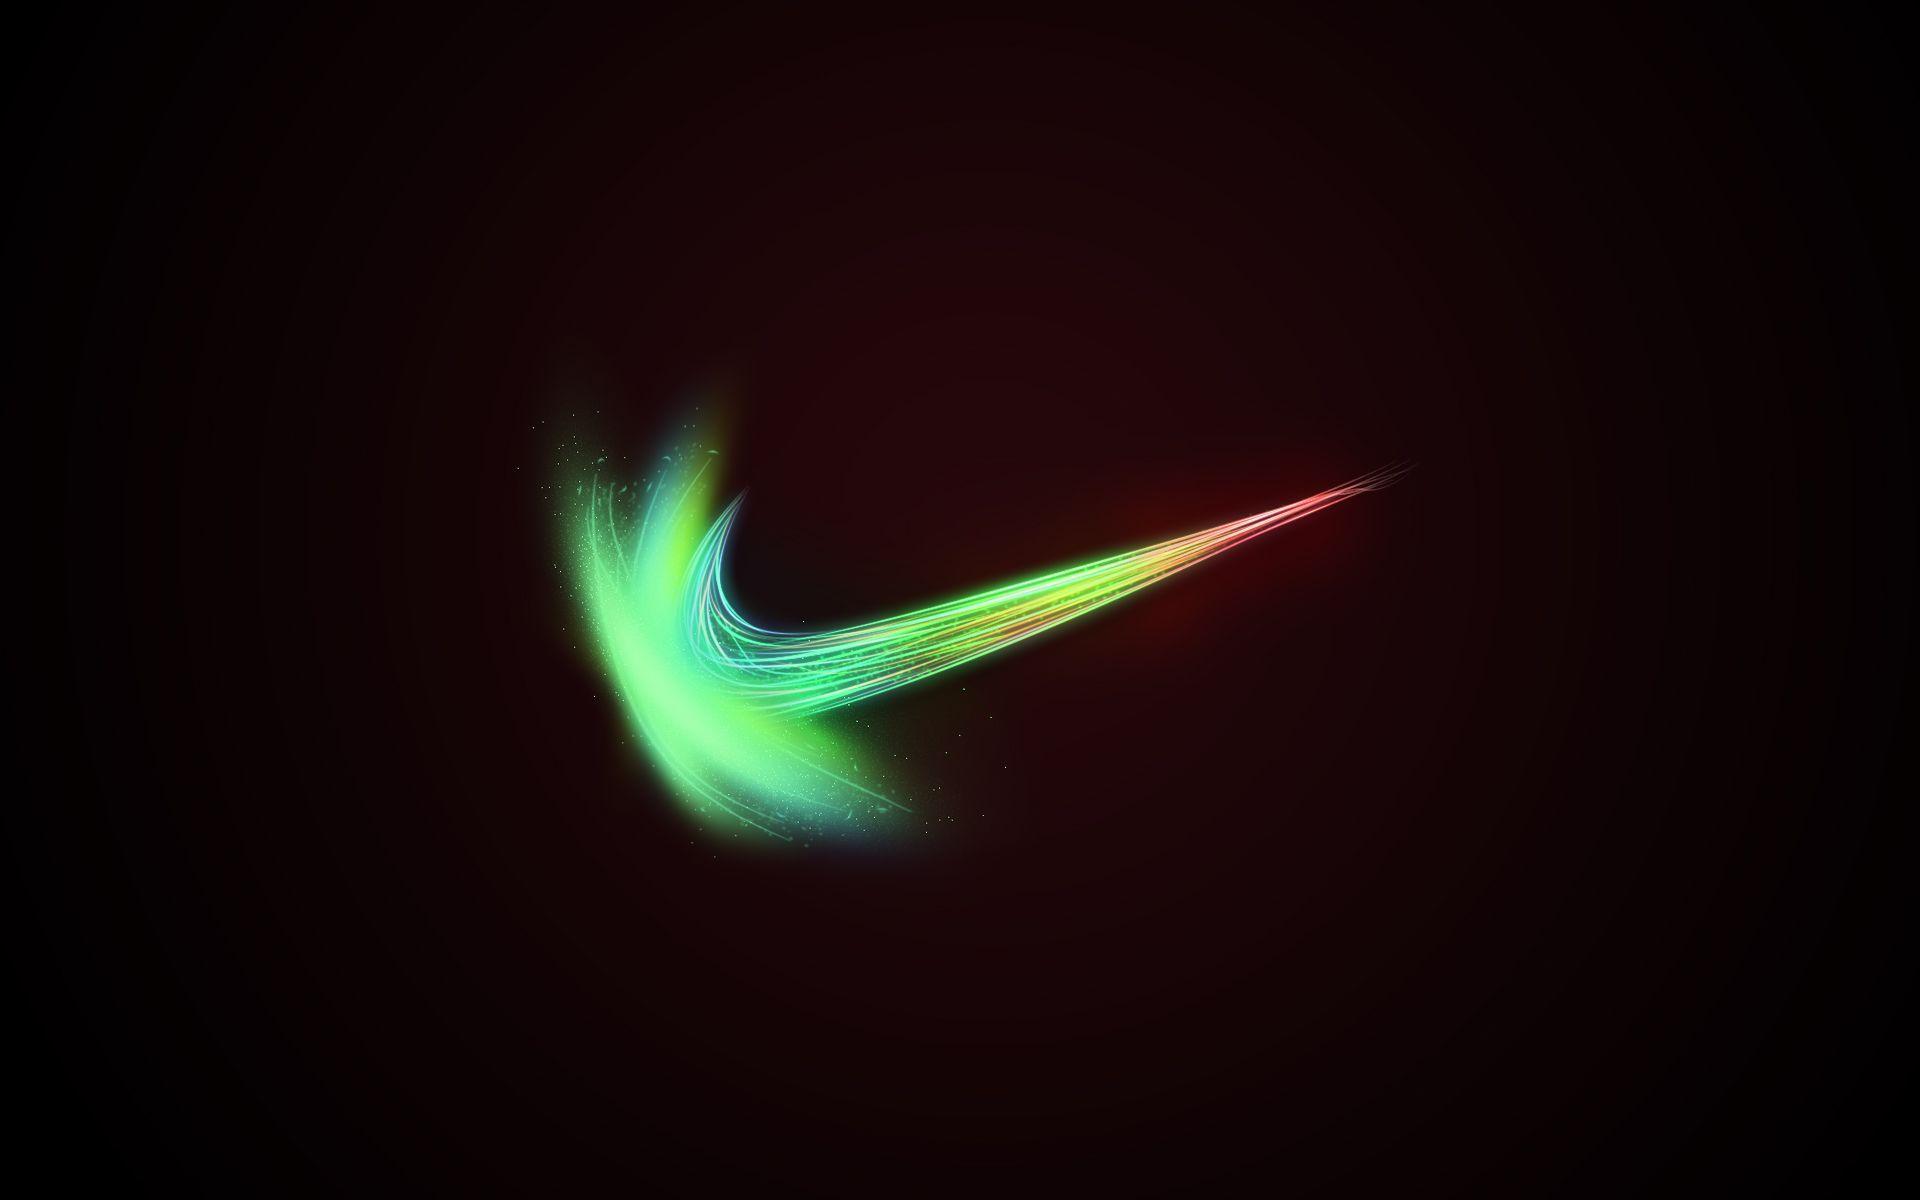 Nike Logo 89 101662 Image HD Wallpaper. Wallfoy.com